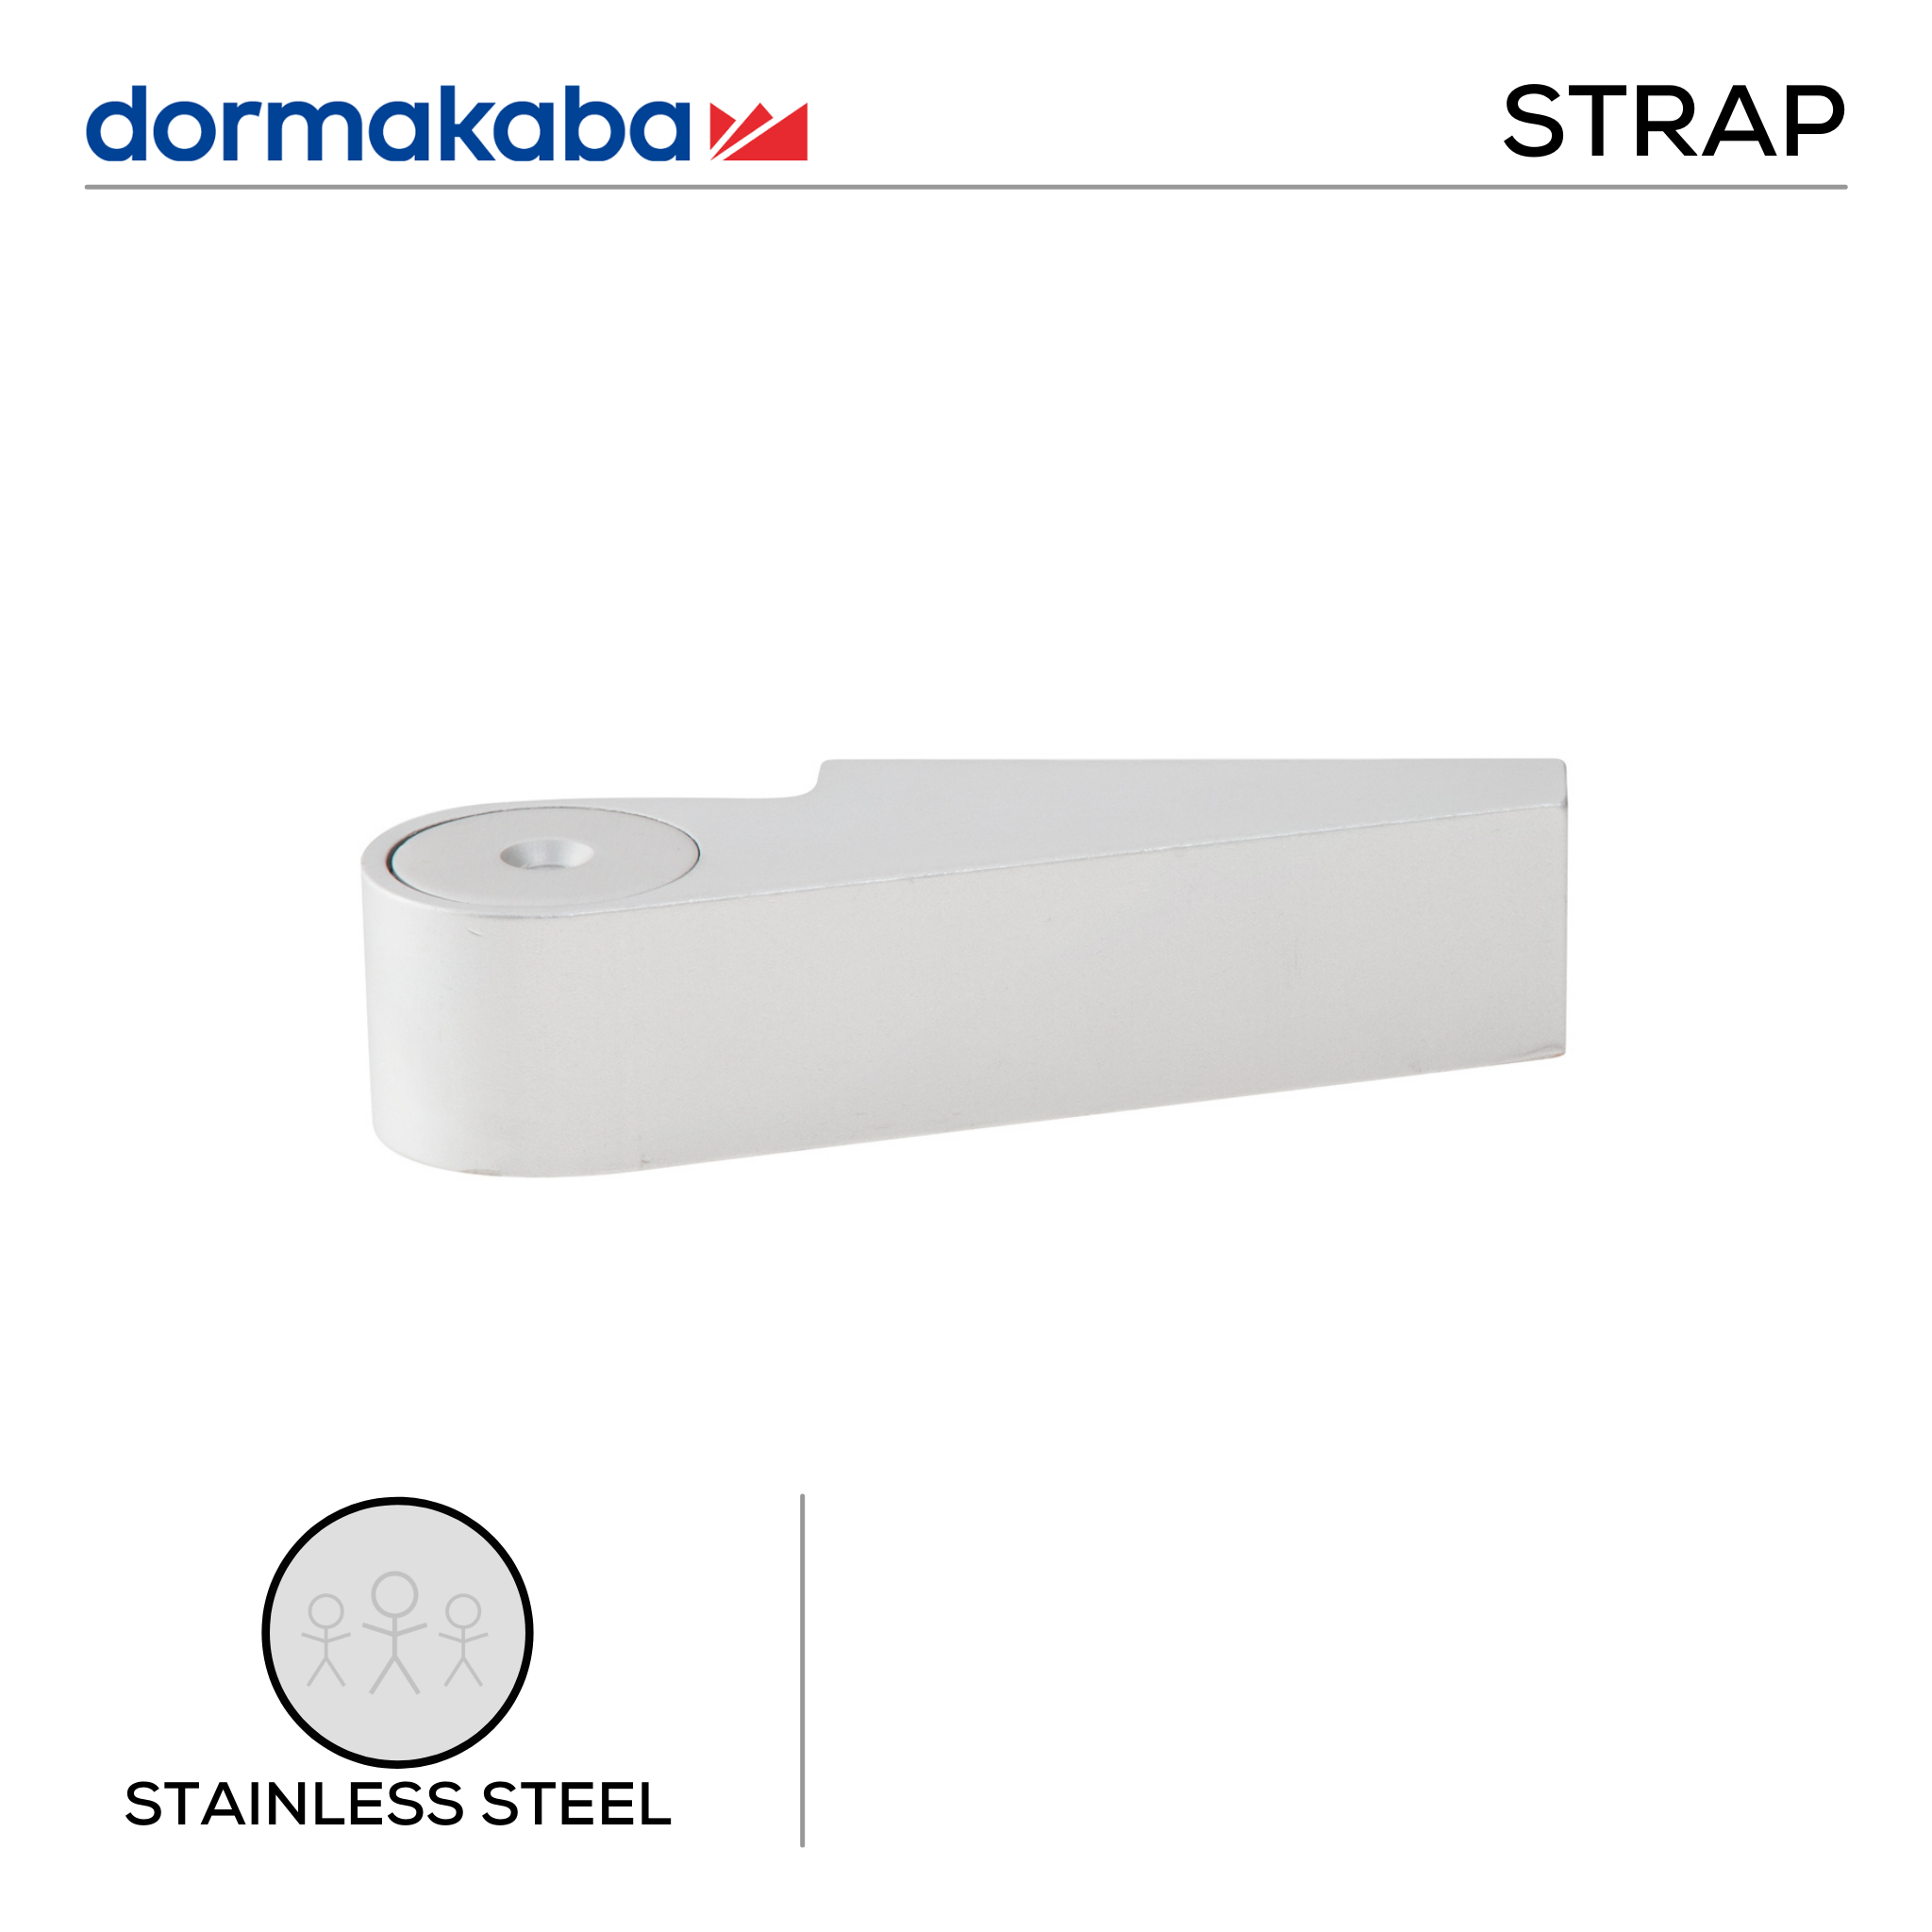 7459, Aluminium Strap, Single Action, Stainless Steel, DORMAKABA